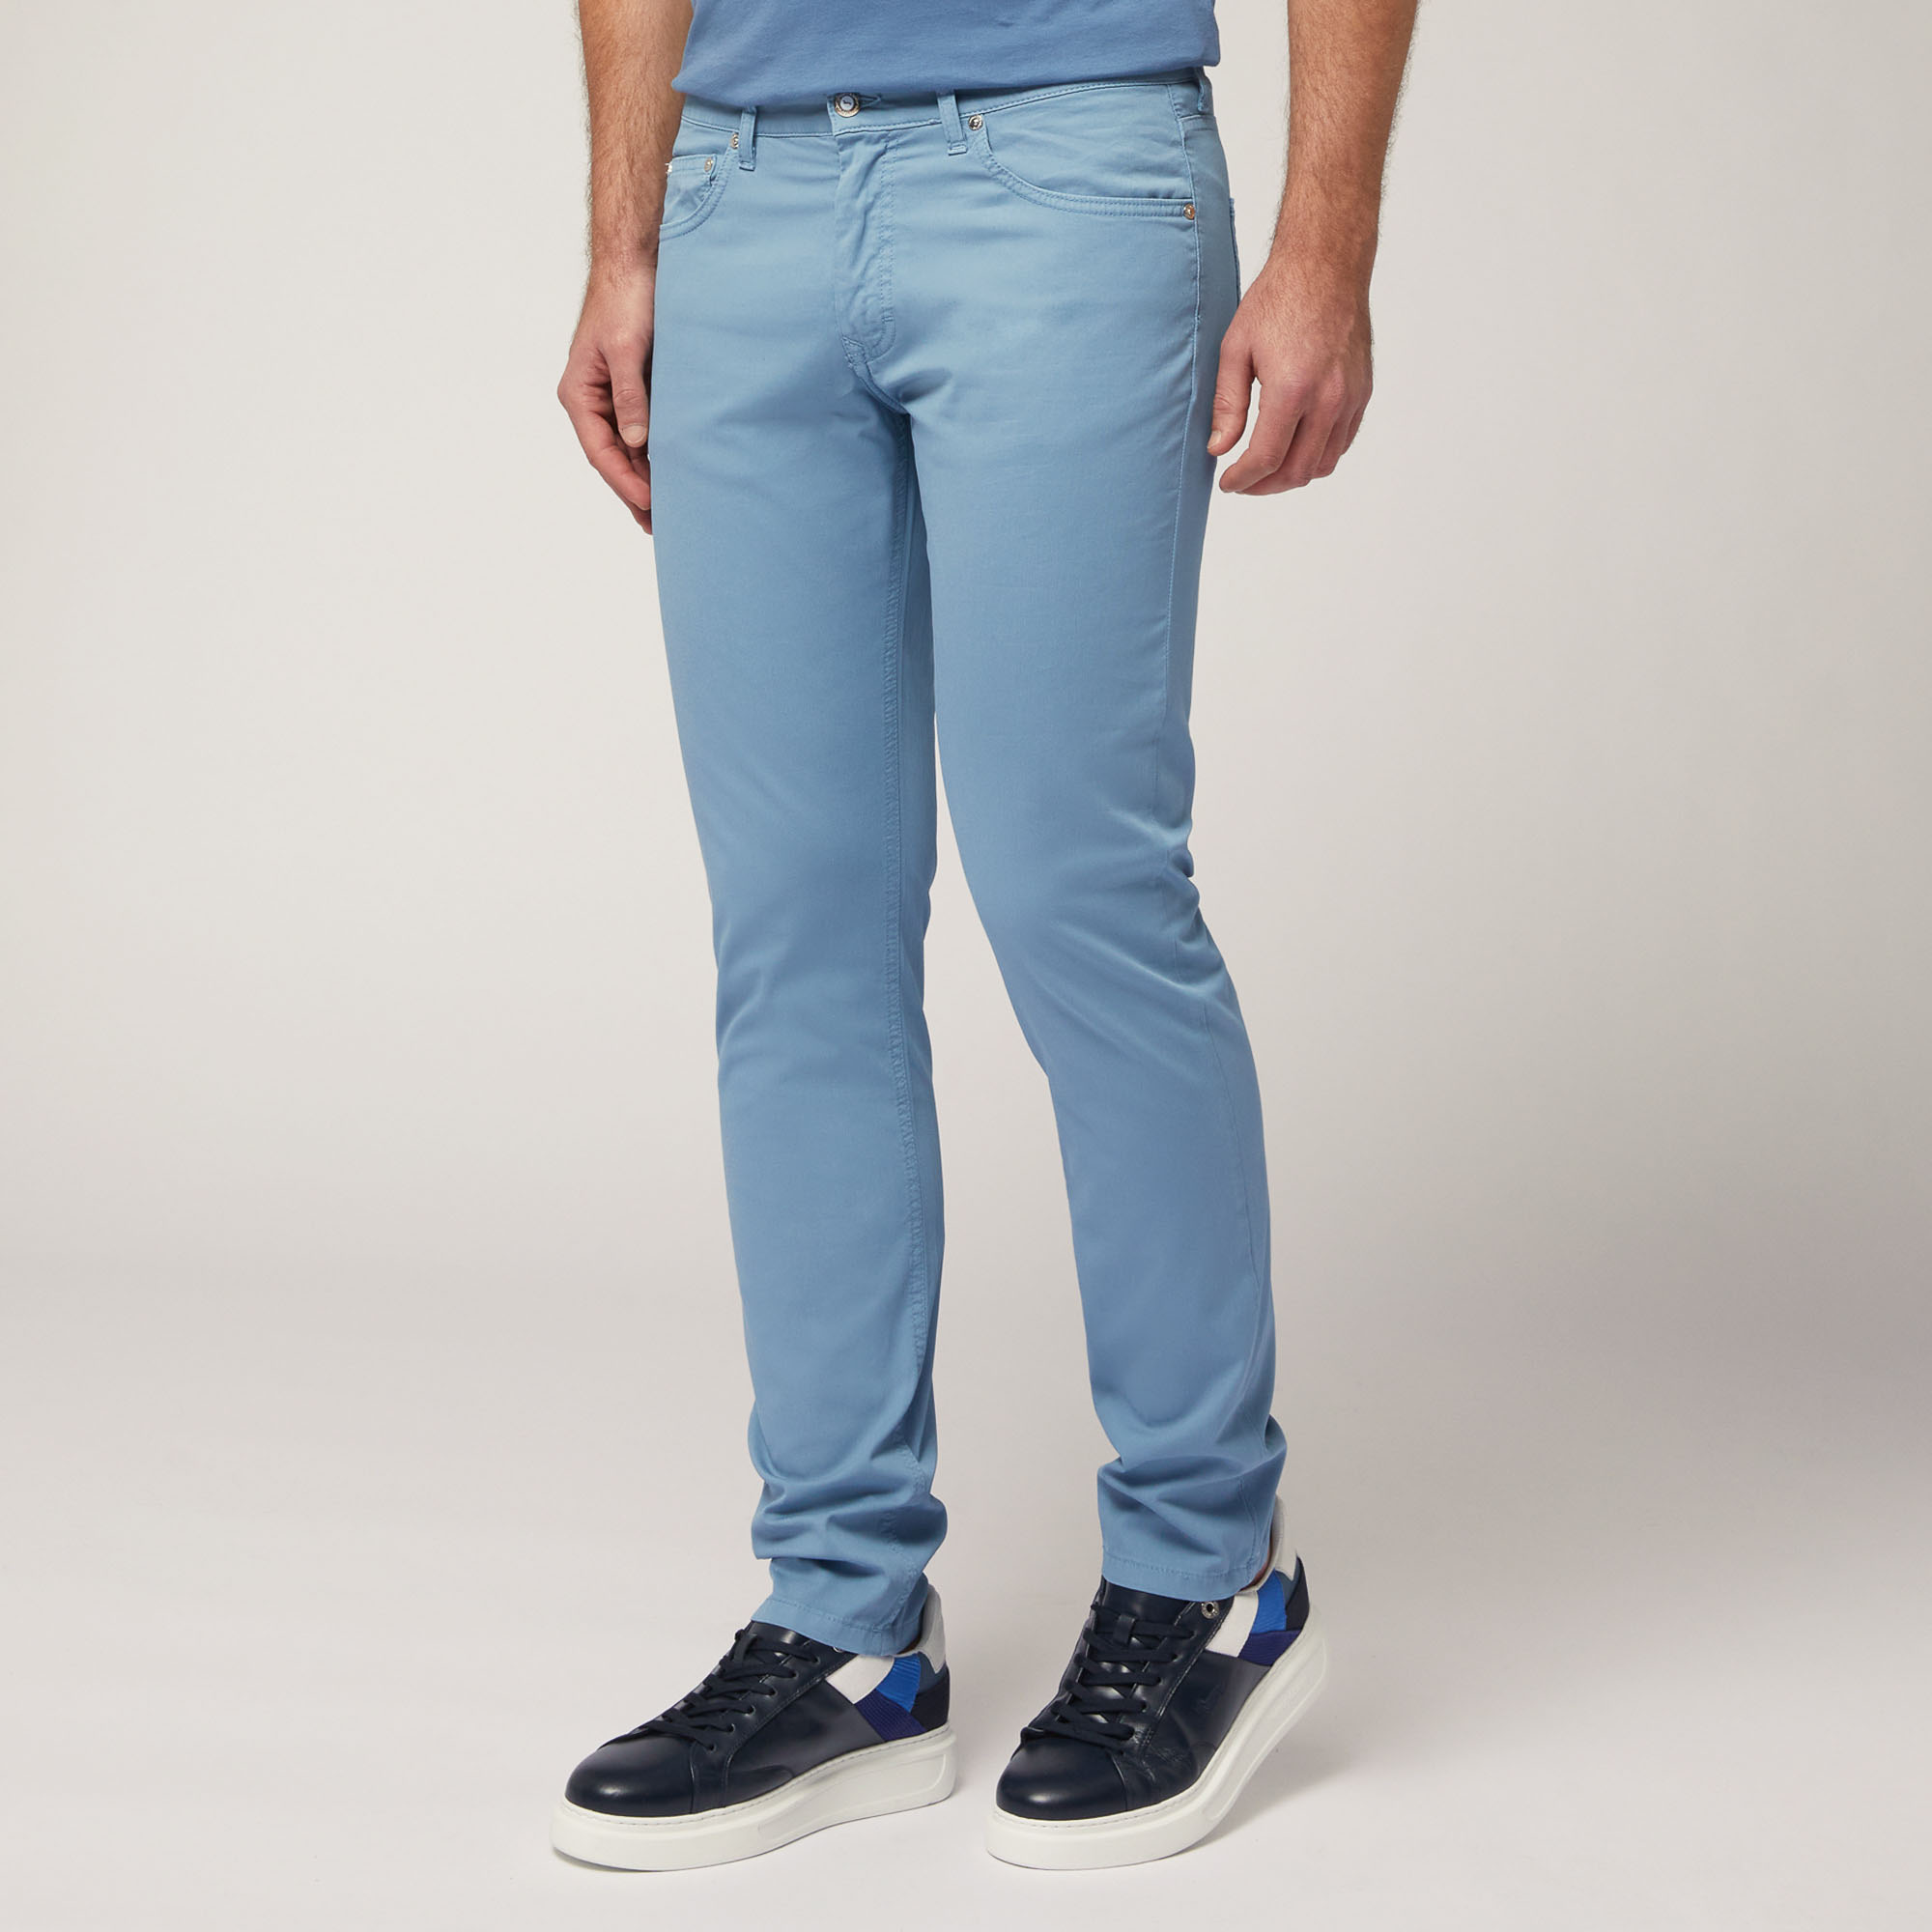 Narrow Five-Pocket Pants, Blue, large